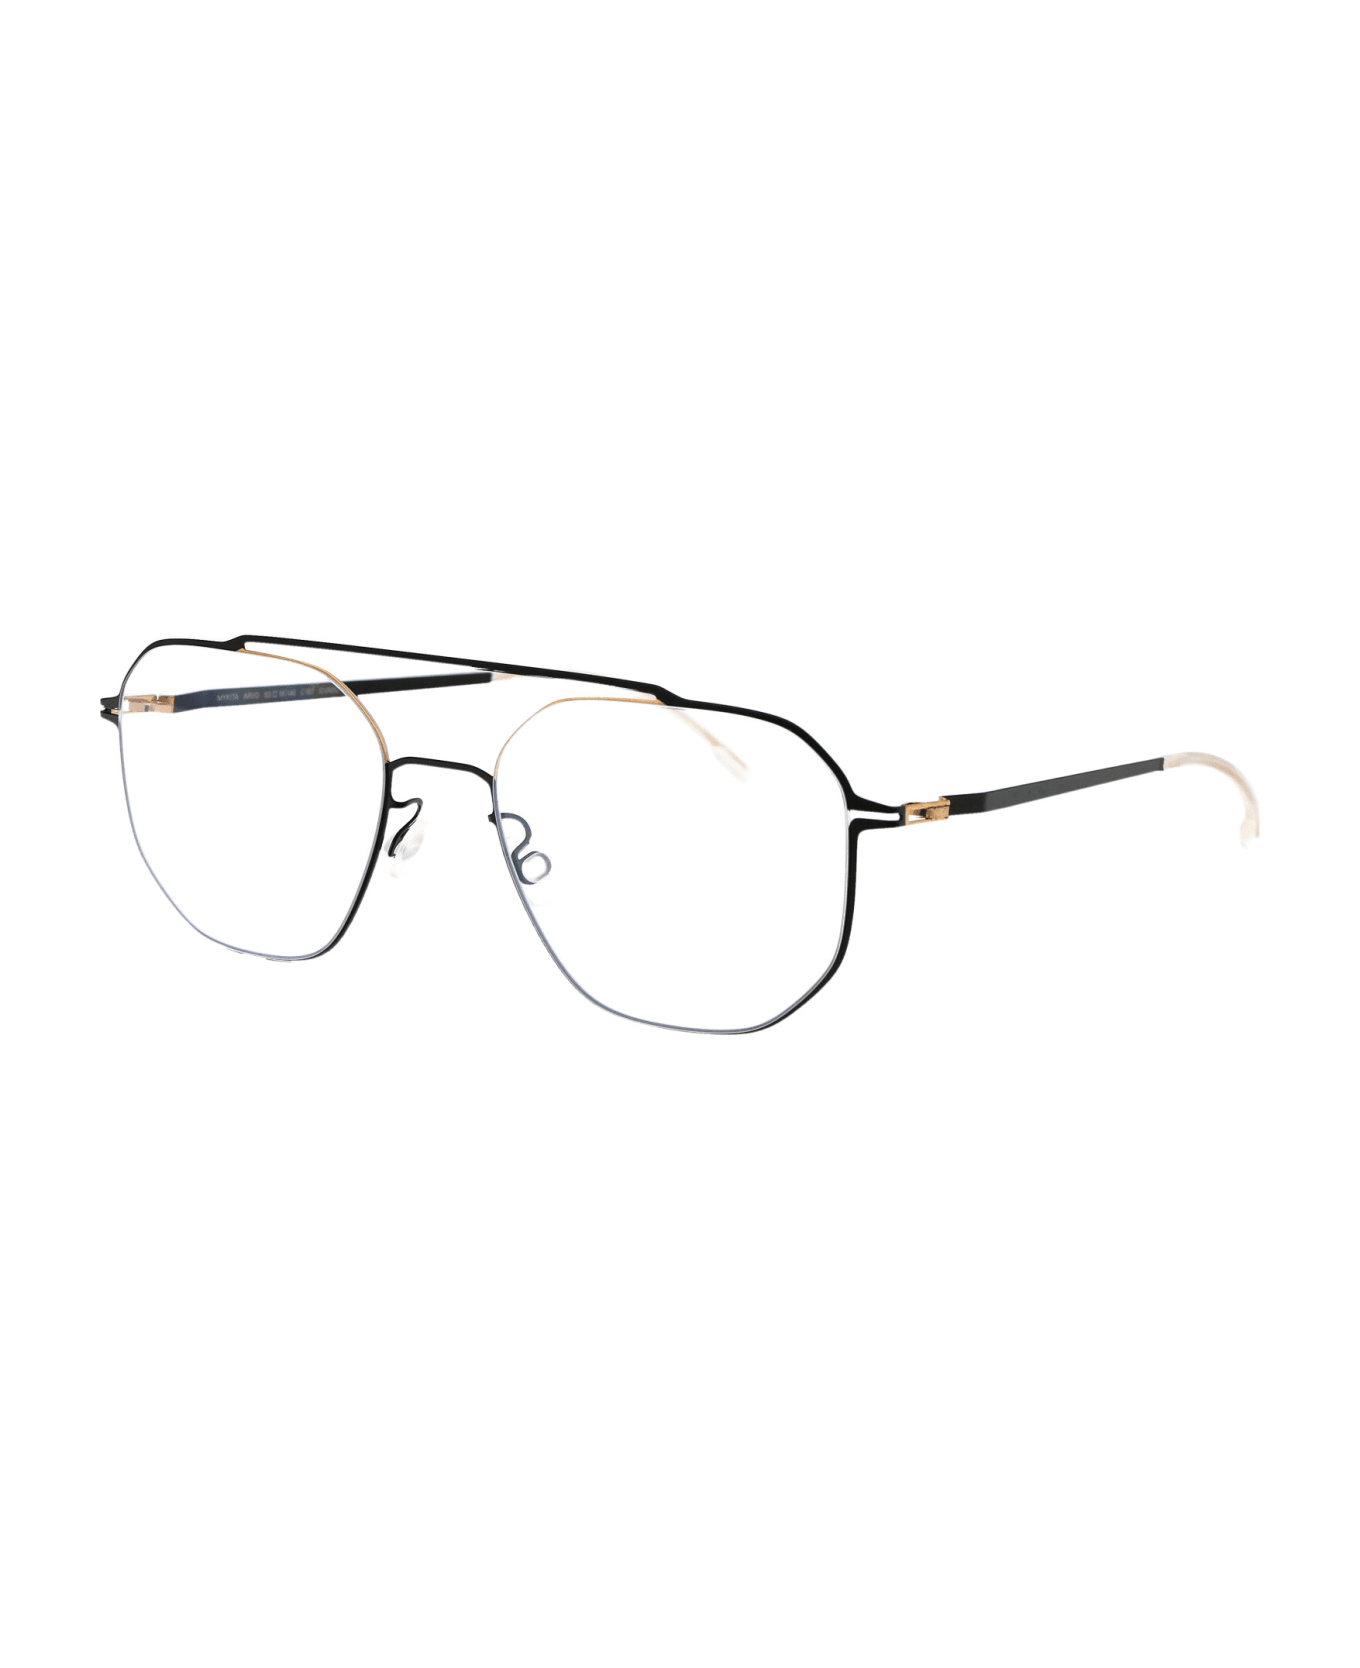 Mykita Arvo Glasses - 167 Gold Jetblack|Clear